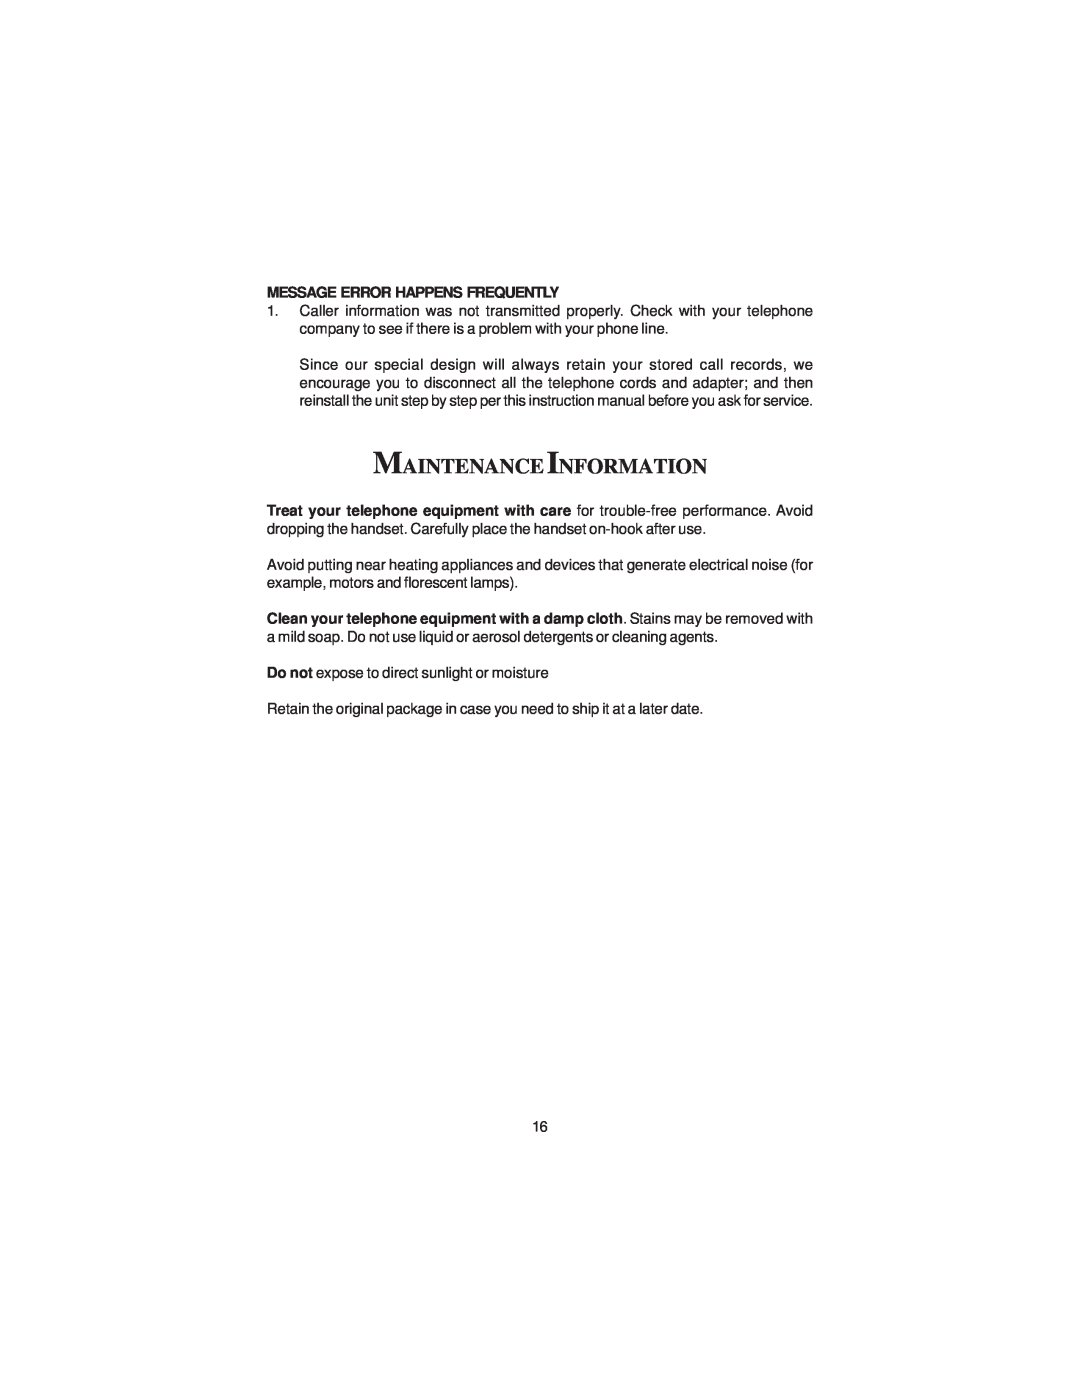 Cortelco 2211 instruction manual Maintenance Information 